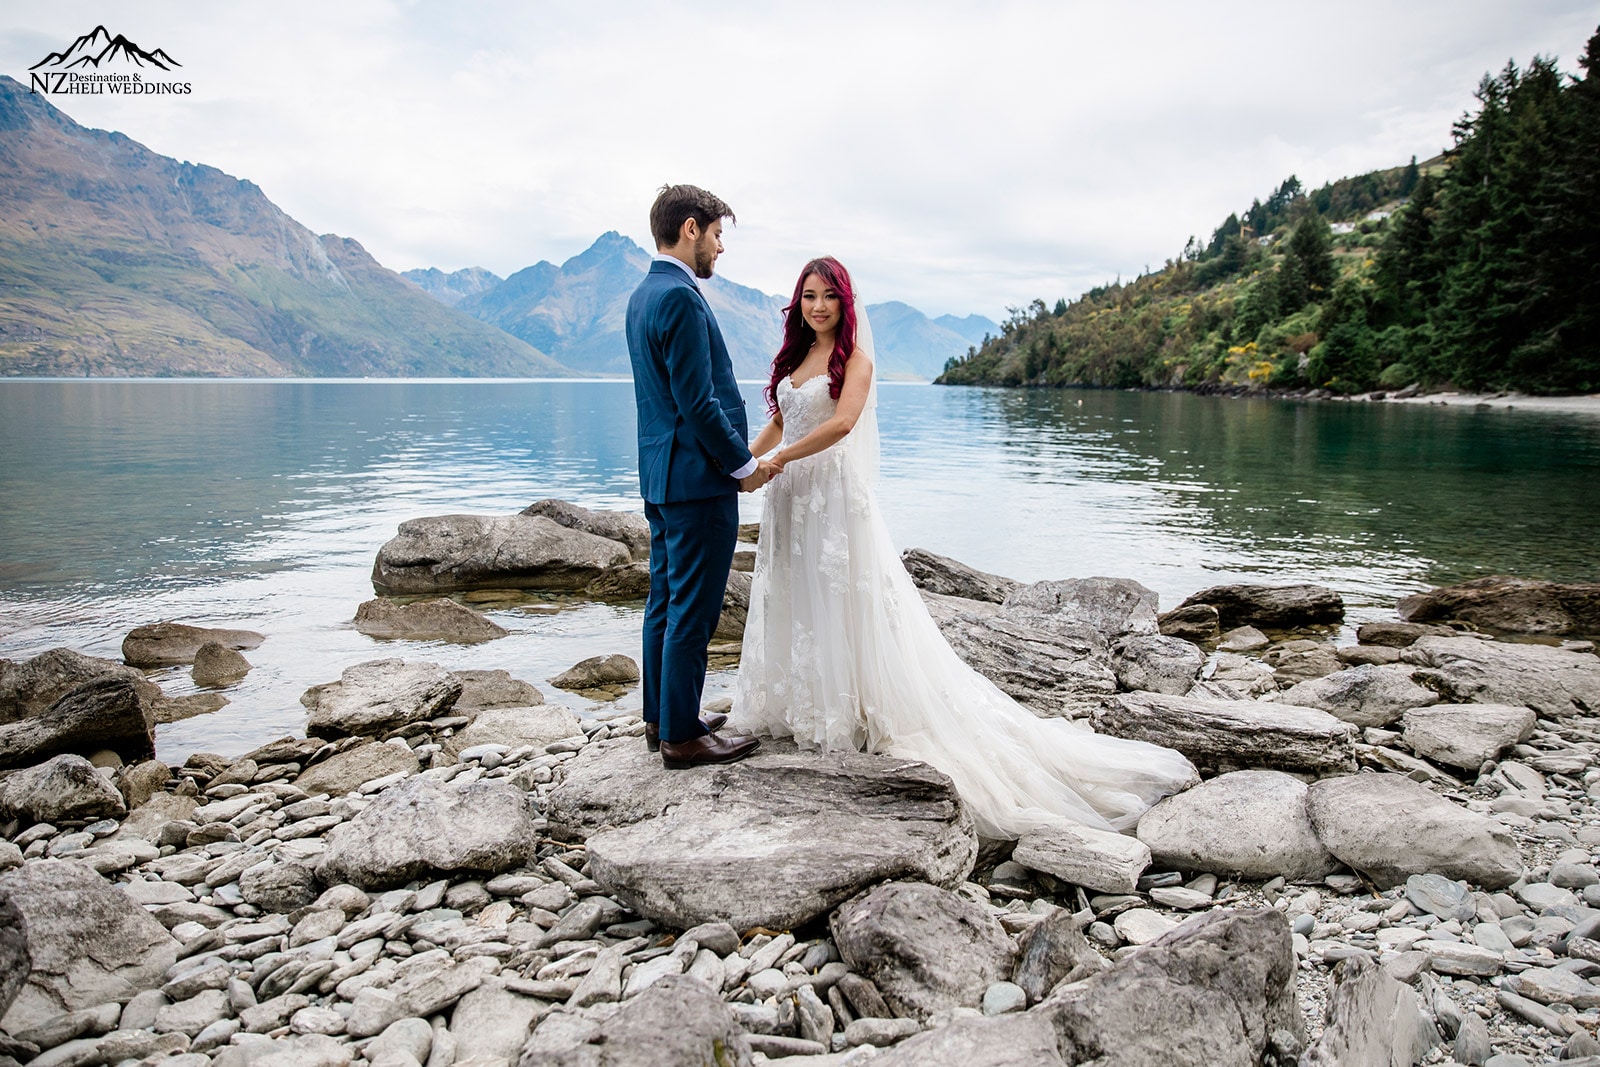 NZ elopement wedding bride with red hair